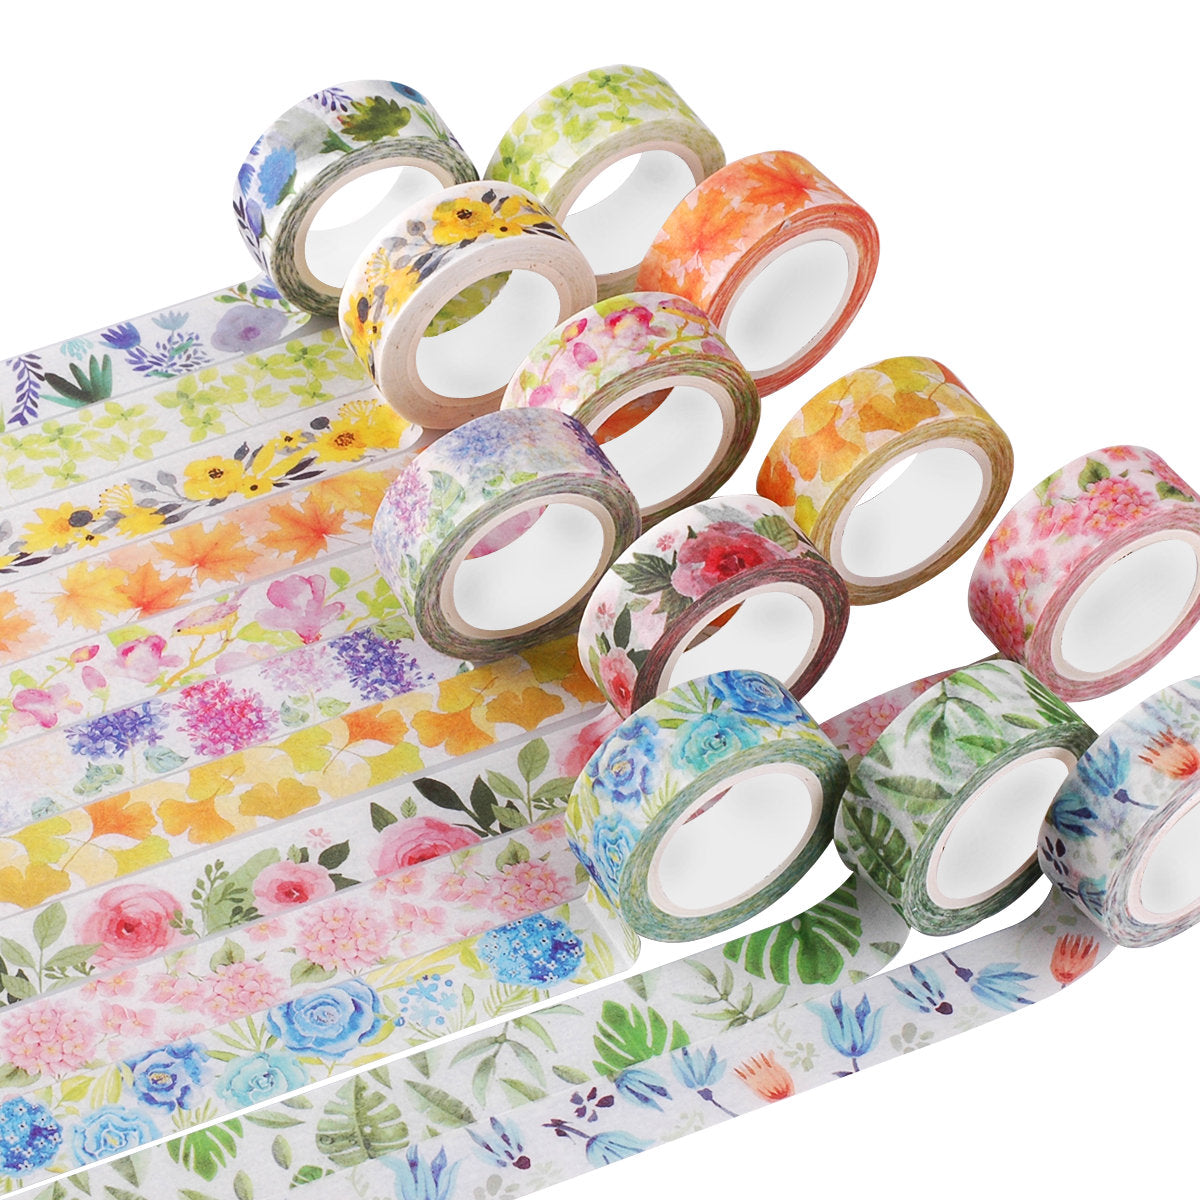 Knaid Vintage Floral Washi Tape Set, 12 Rolls of Decorative Solid Colo